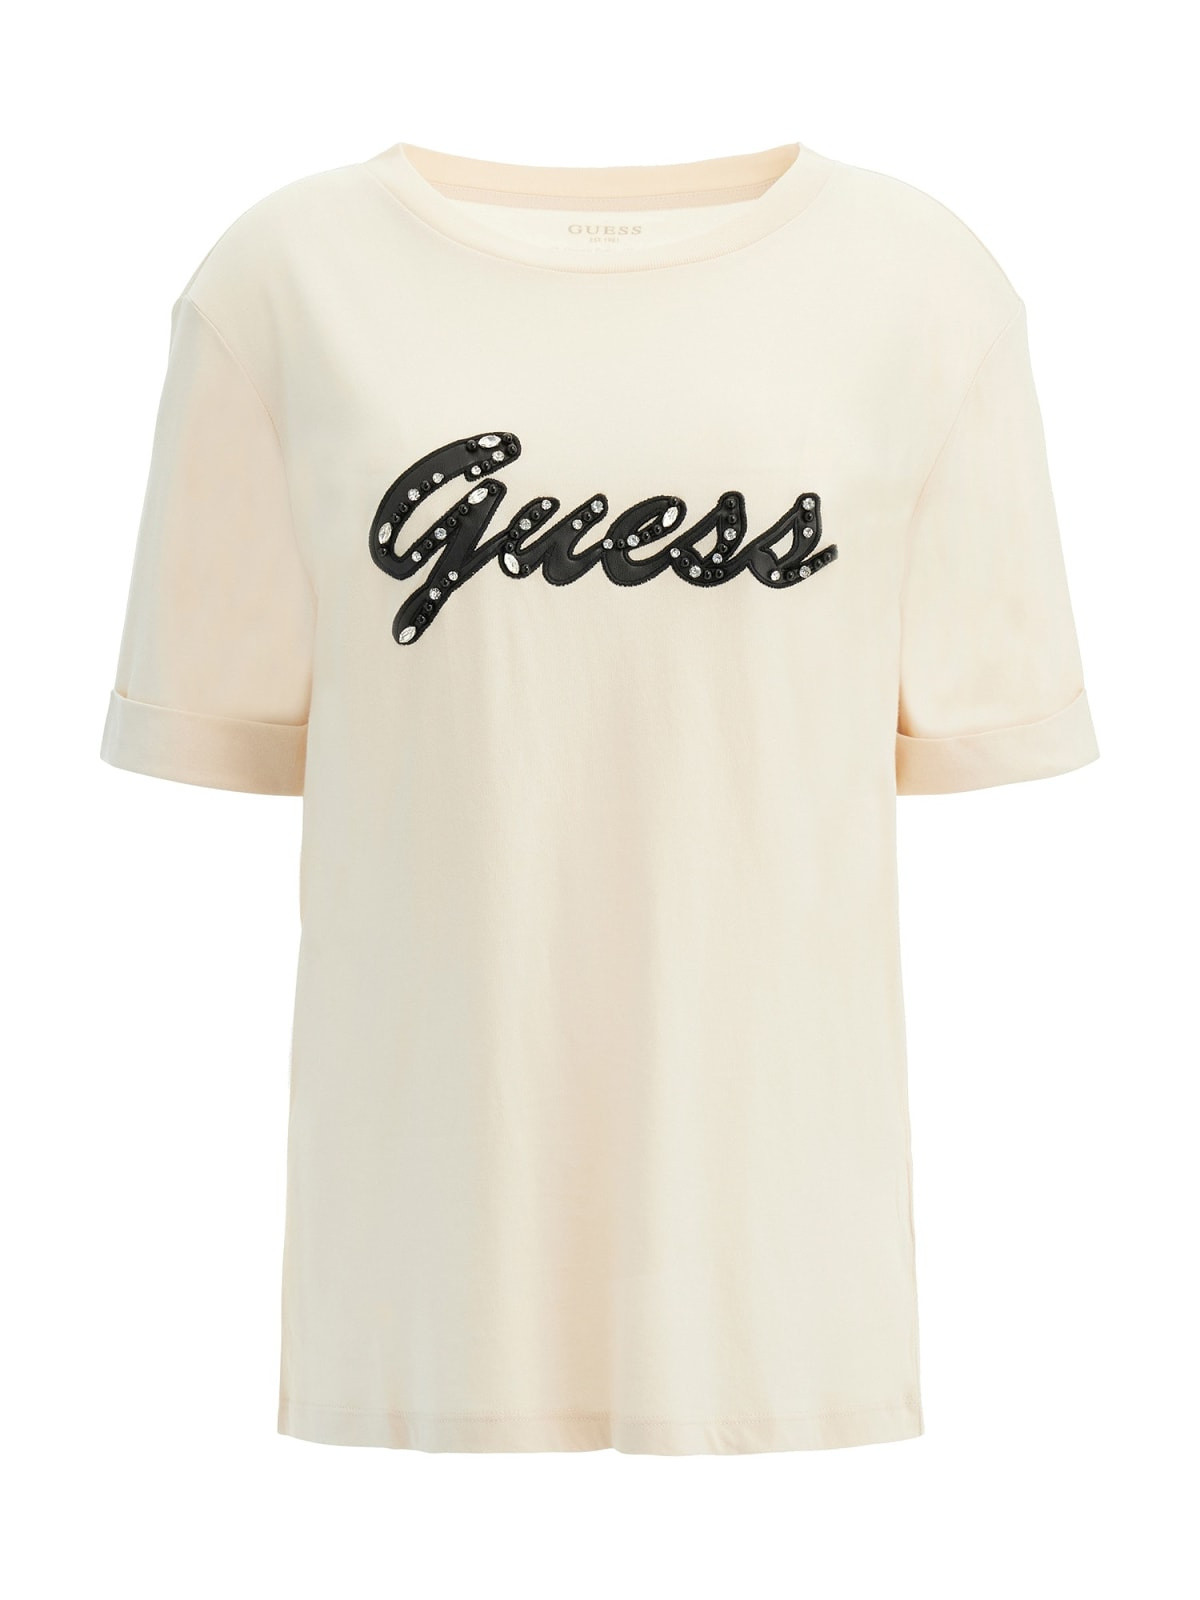 Faux leather logo T-shirt with rhinestones, White, large image number 0